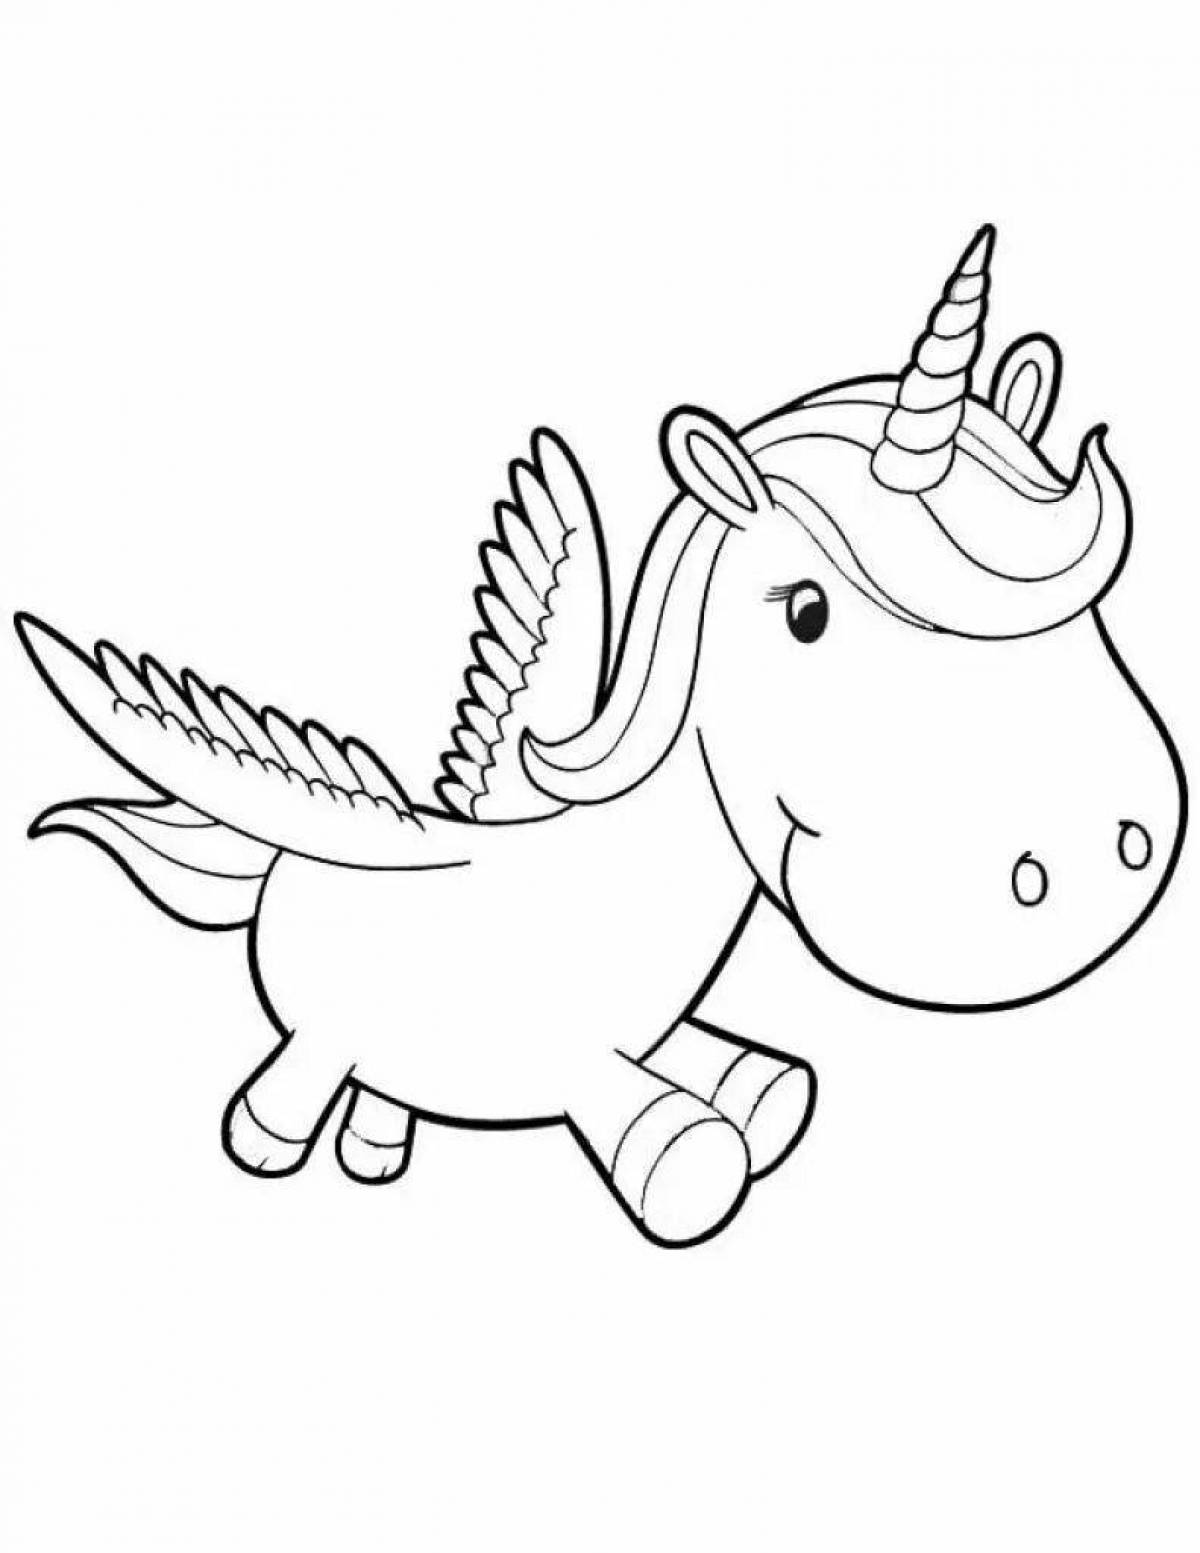 Violent unicorn coloring book for kids 3 4